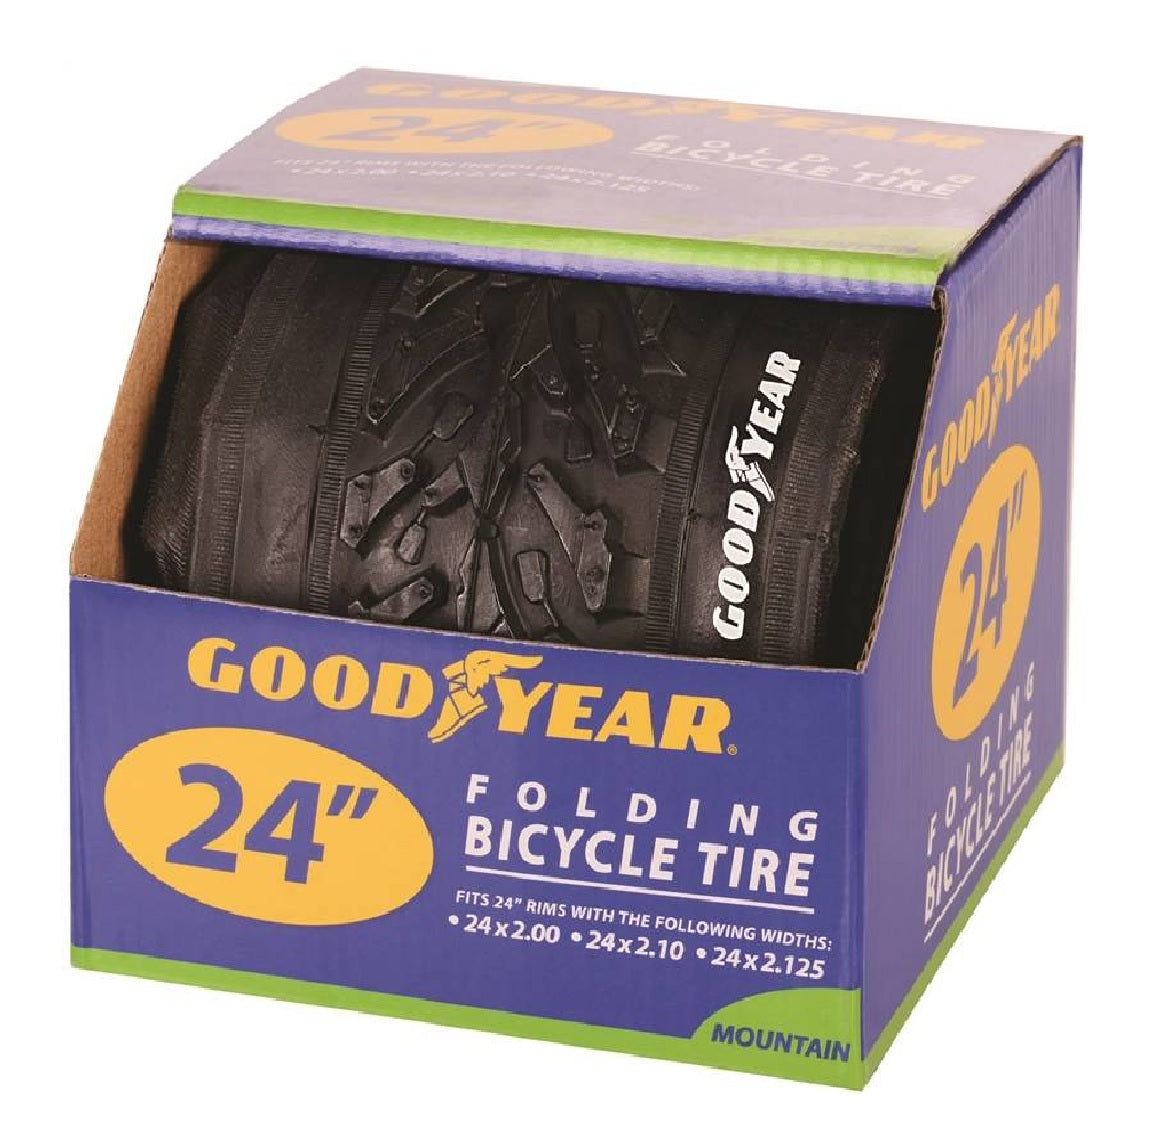 Goodyear 91116 24" Folding Bike Tire, Black